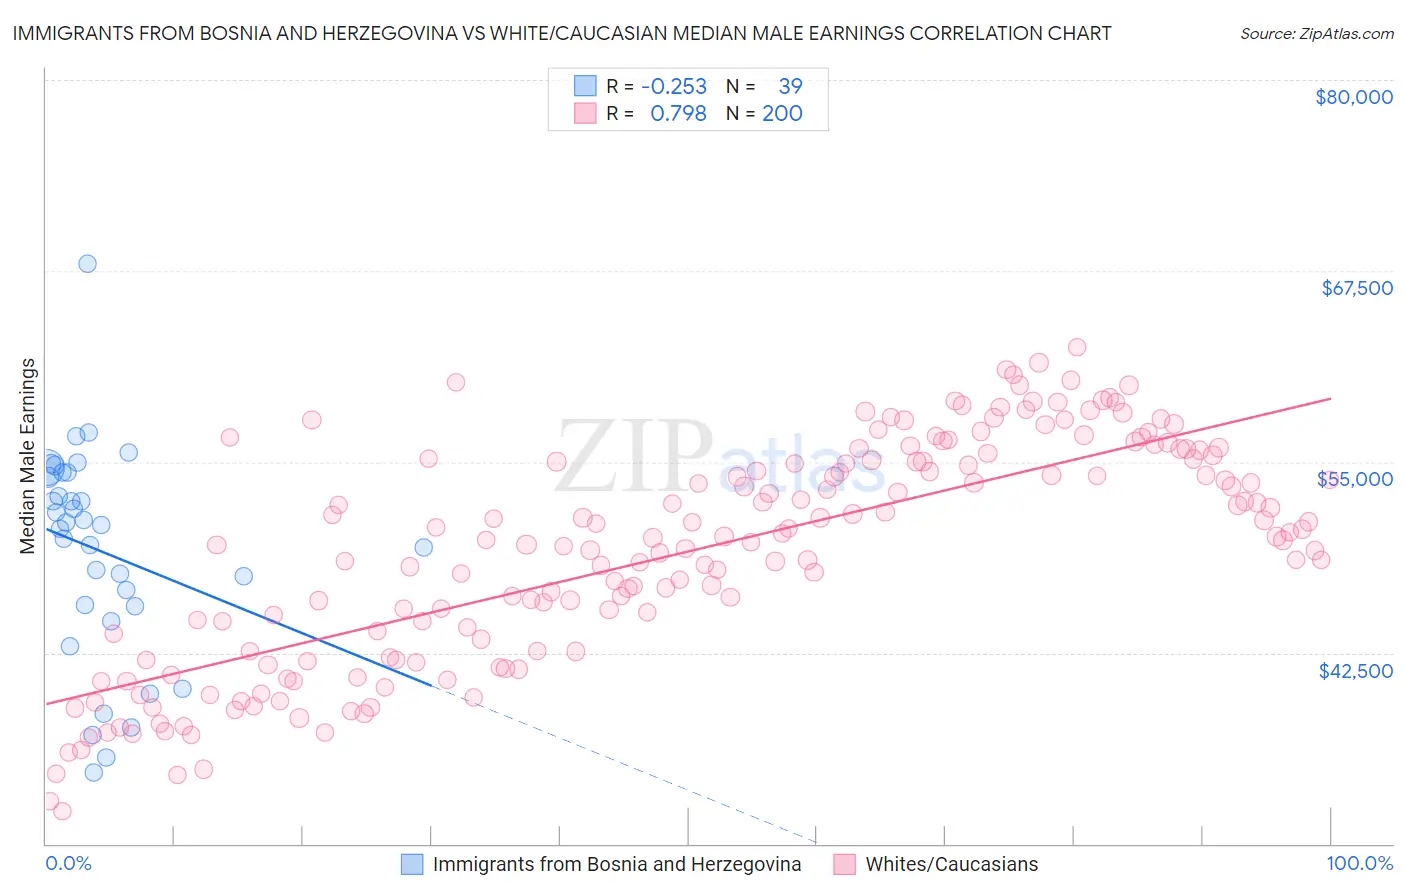 Immigrants from Bosnia and Herzegovina vs White/Caucasian Median Male Earnings